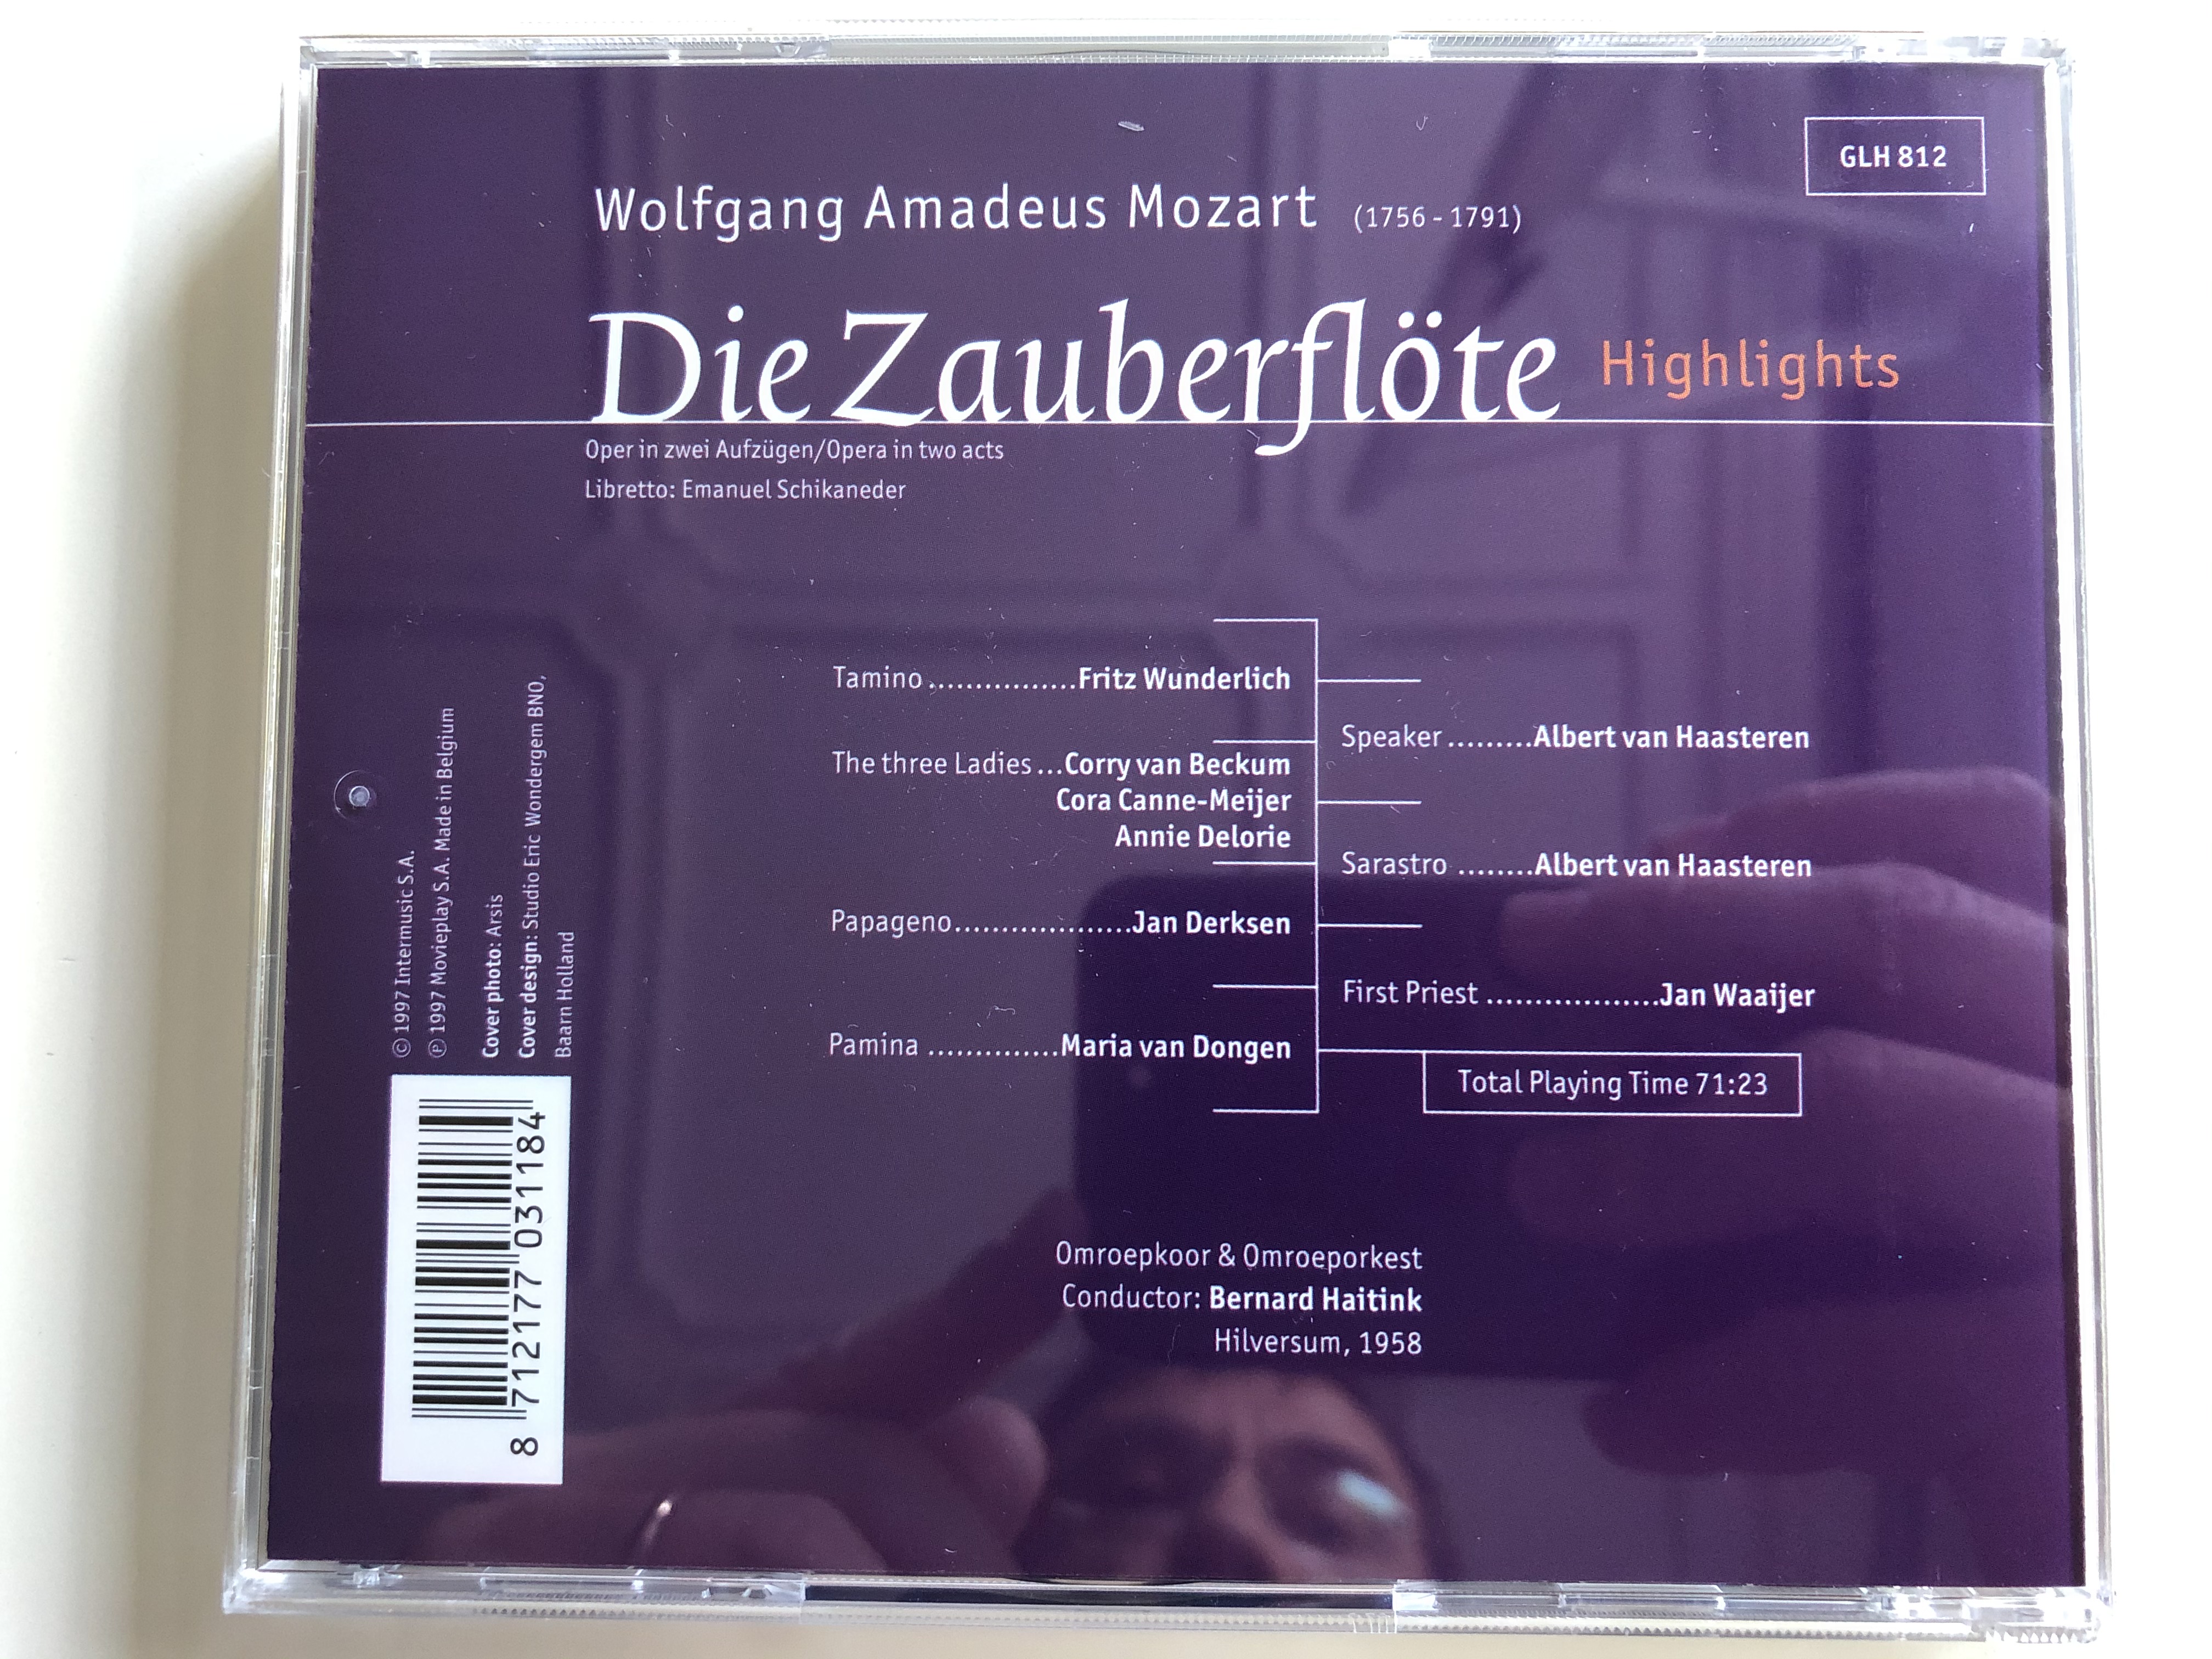 wolfgang-amadeus-mozart-die-zauberflote-highlights-fritz-wunderlich-jan-derksen-omroepkoor-omroeporkest-bernard-haitink-hilversum-1958-hilversum-audio-cd-1958-glh-812-7-.jpg